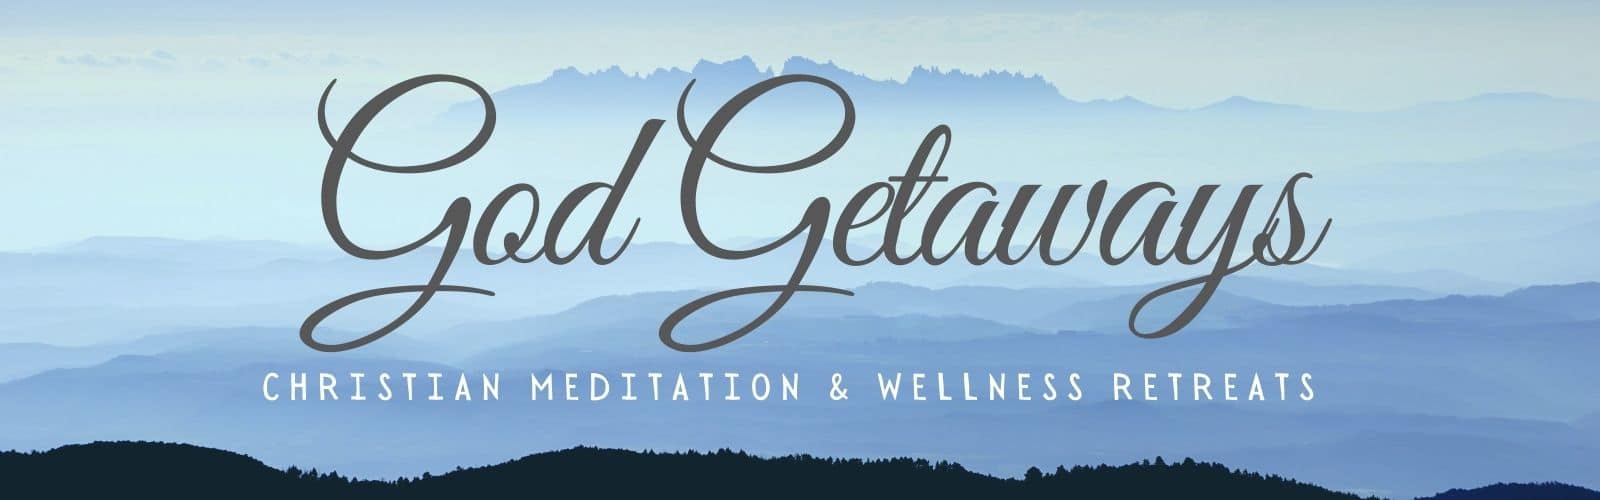 christian meditation retreats